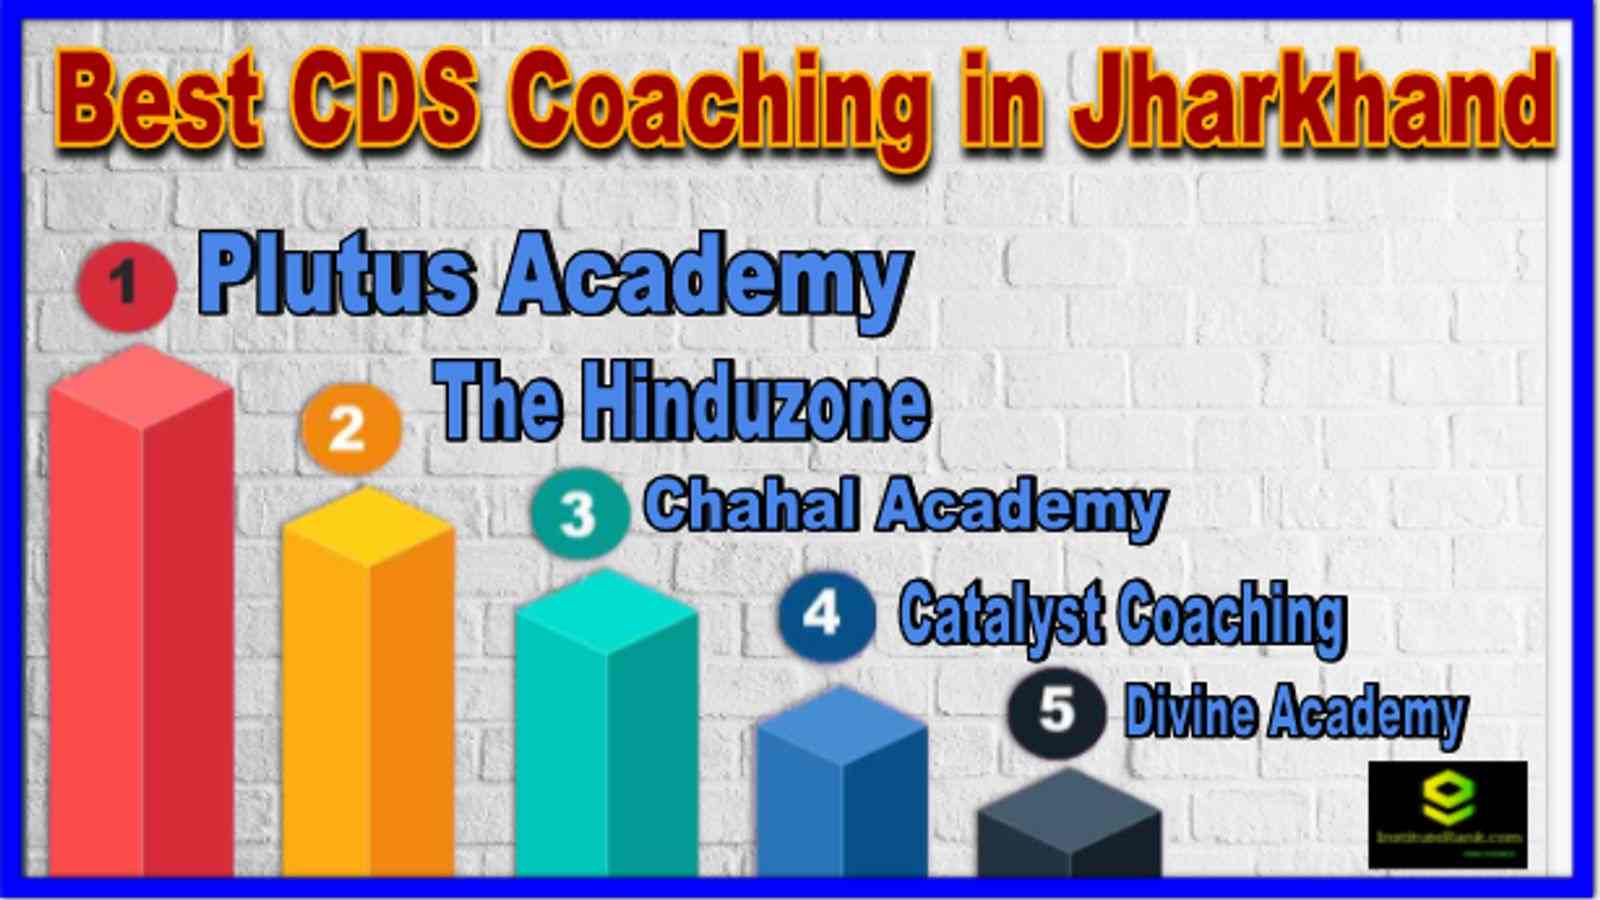 Top CDS Coaching in Jharkhand